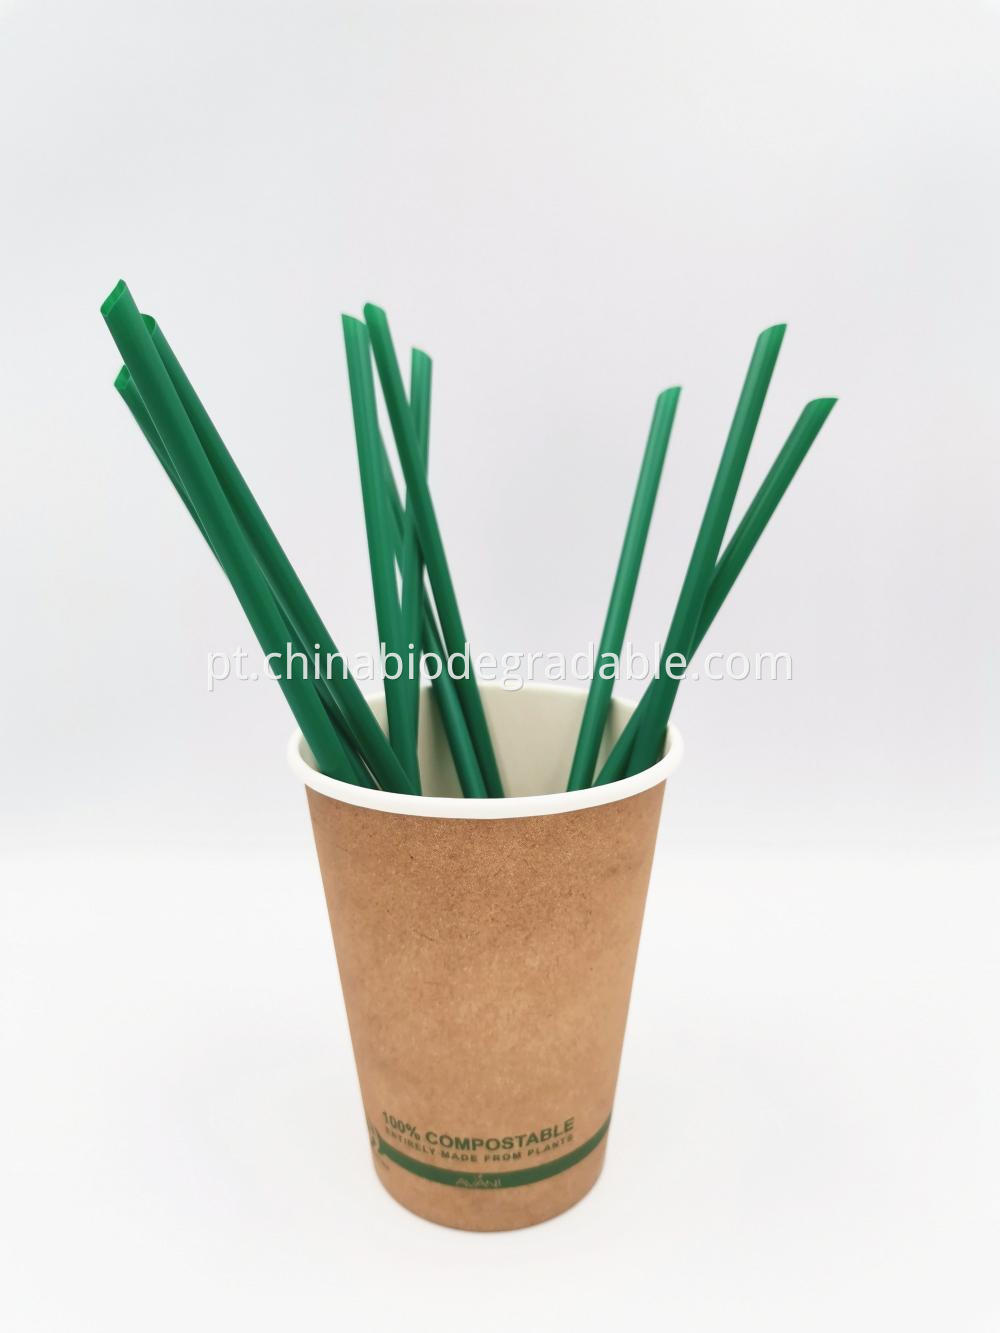 Cornstrach 100% Natural Plant Eco Straws